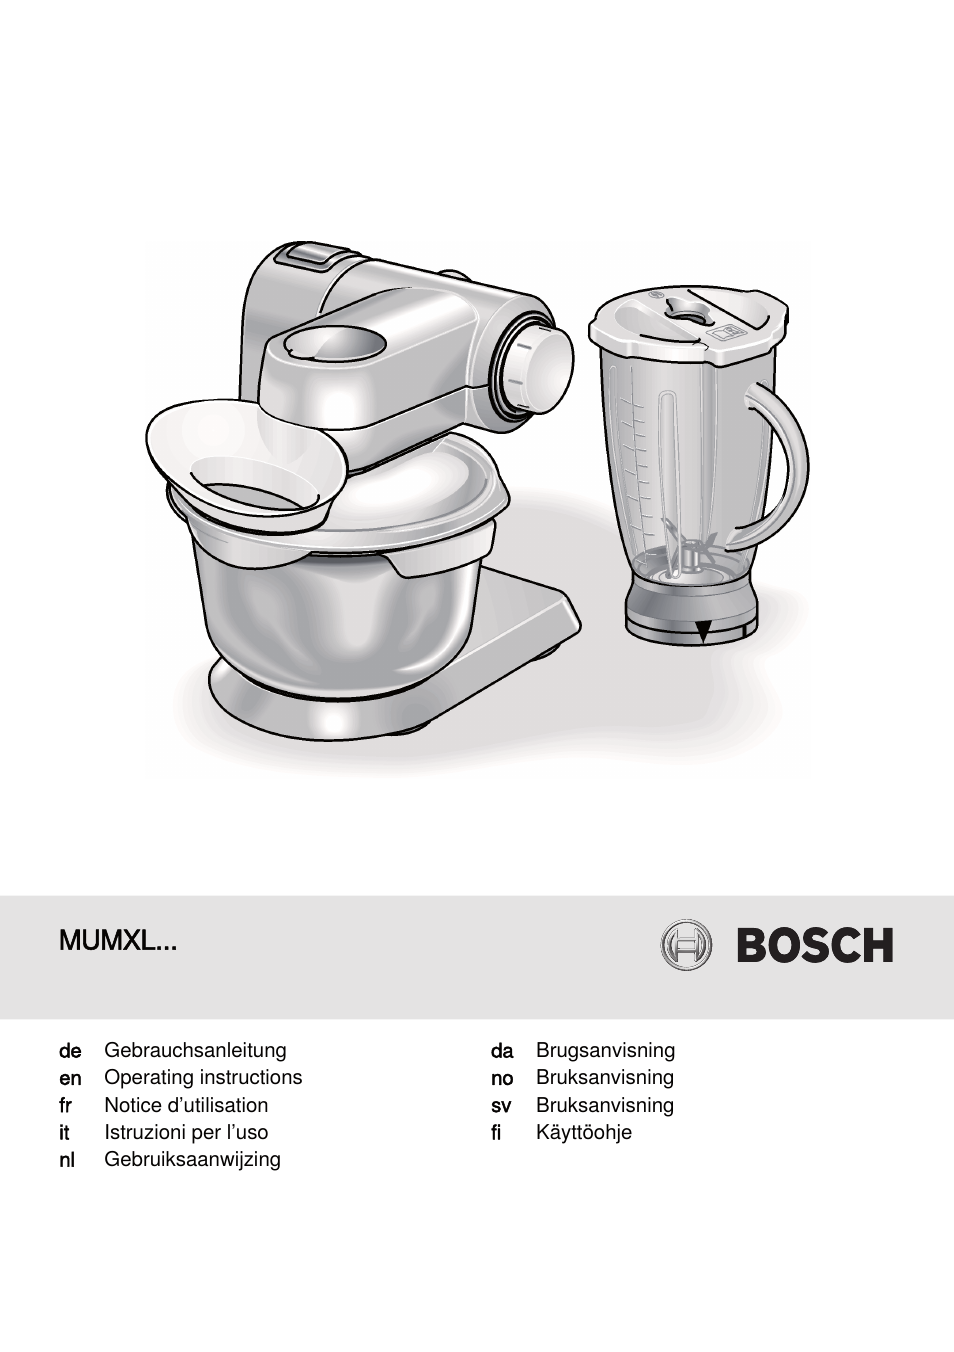 Bosch MUMXL10T Kitchen machine MaxxiMUM User Manual | 132 pages